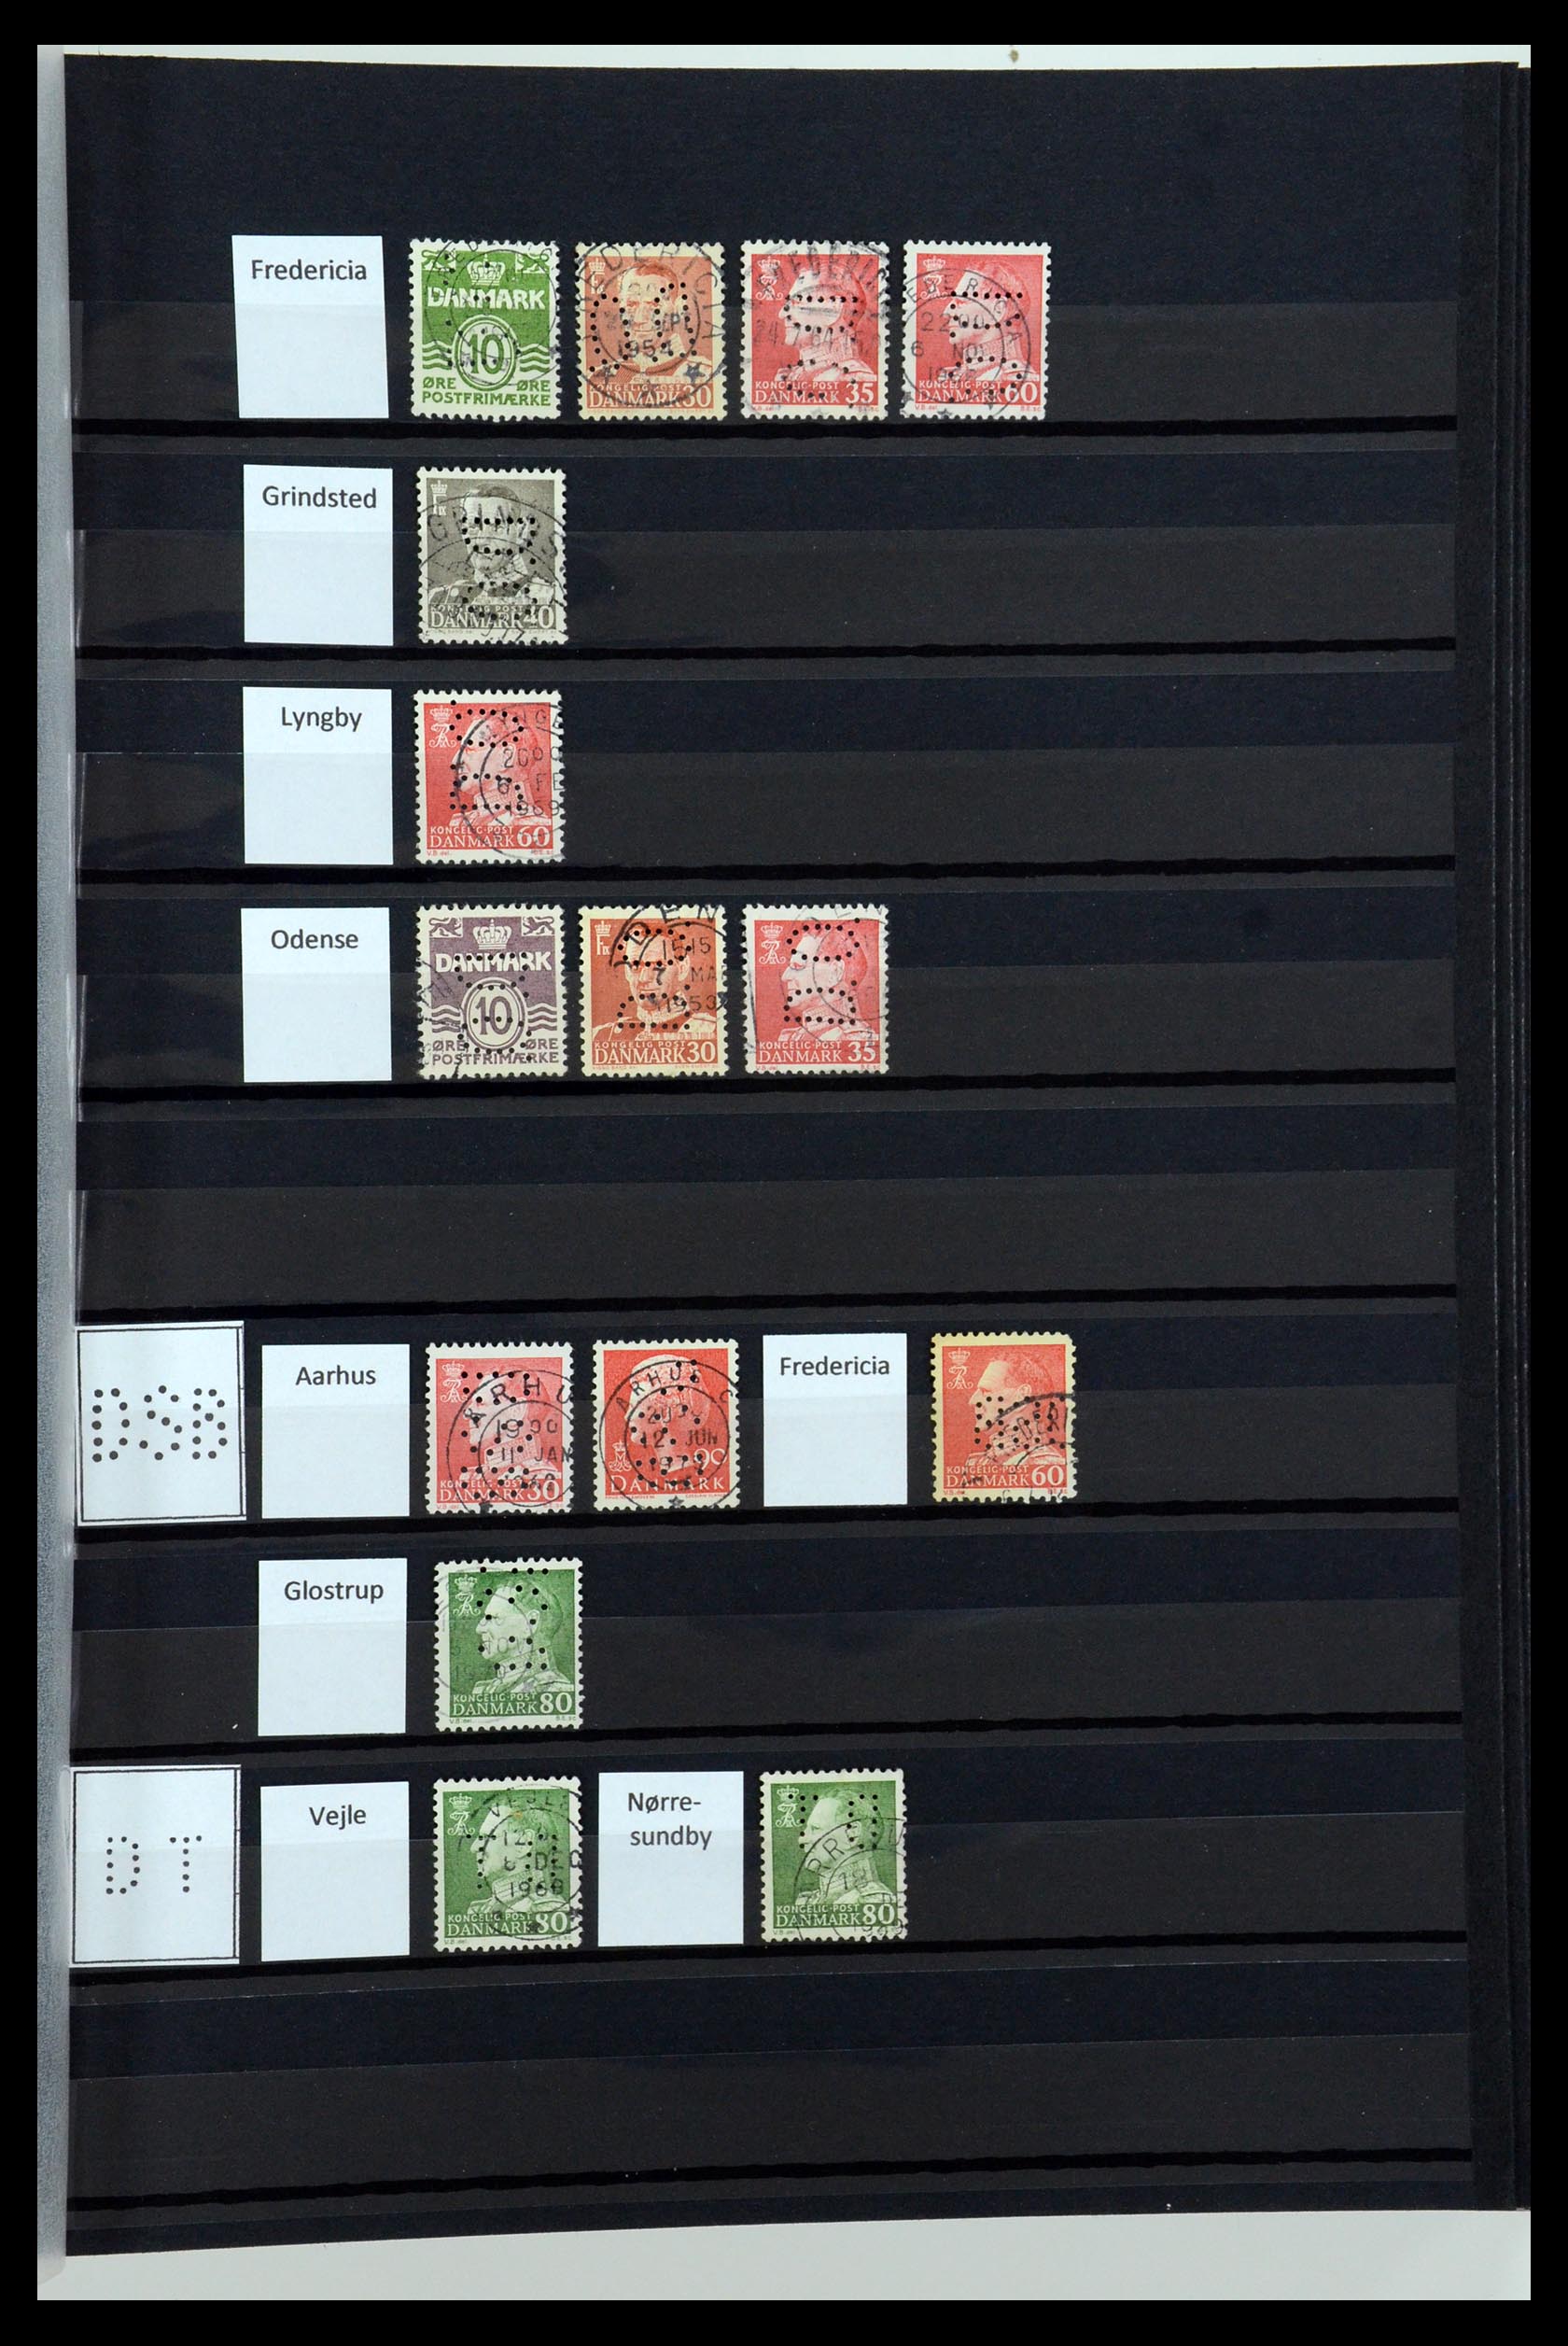 36396 064 - Stamp collection 36396 Denmark perfins.